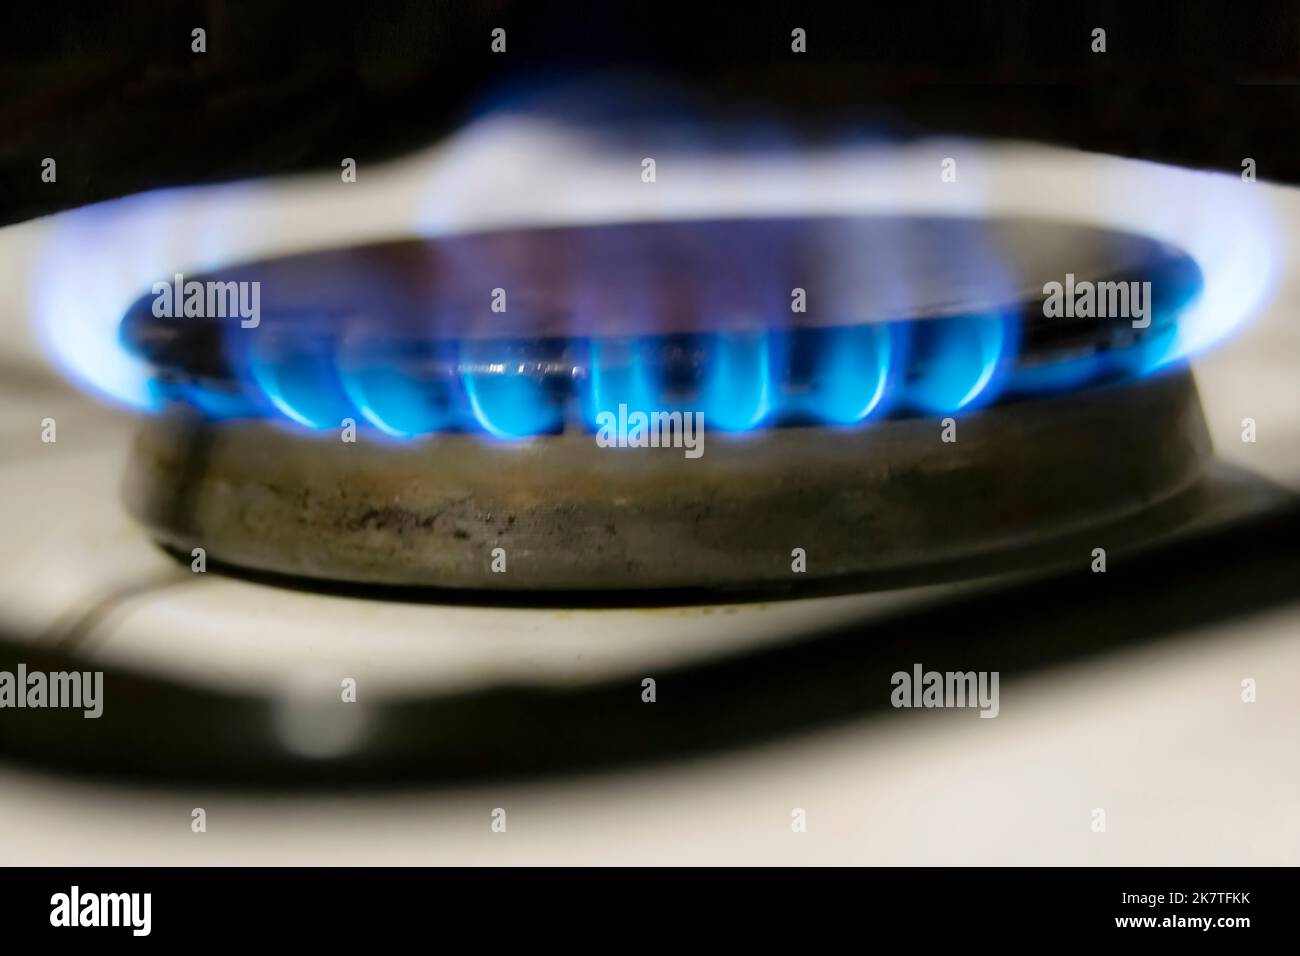 https://c8.alamy.com/comp/2K7TFKK/blue-fire-in-gas-burner-natural-gas-burning-on-kitchen-gas-stove-global-energy-crisis-concept-panel-from-steel-with-gas-ring-burner-on-dark-2K7TFKK.jpg